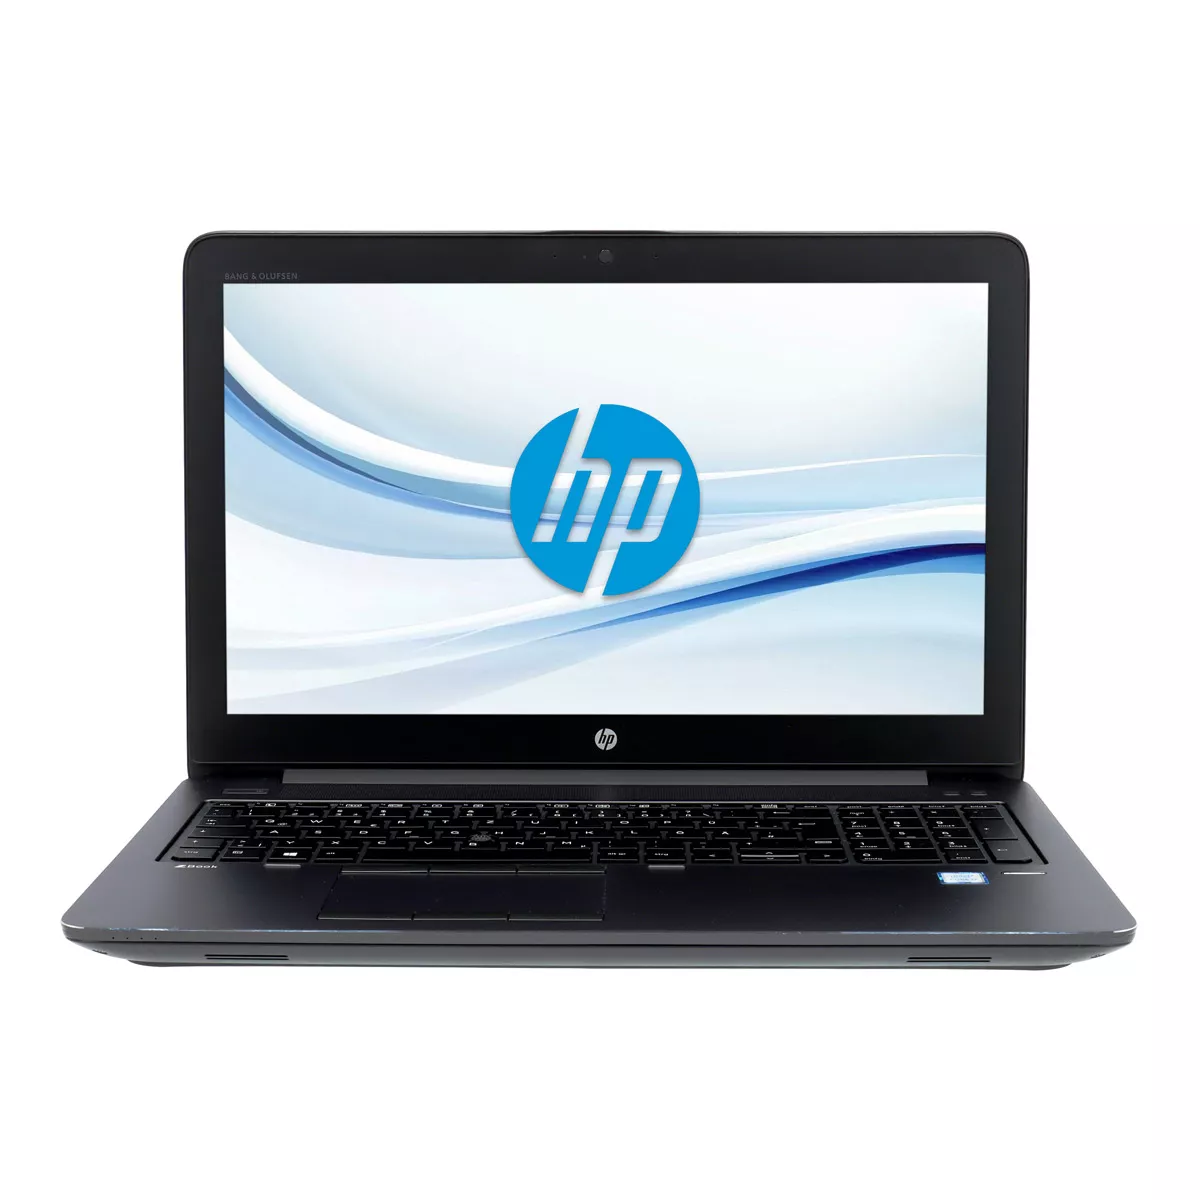 HP ZBook 15 G3 Core i7 6700HQ nVidia Quadro M2000M 16 GB 240 GB M.2 SSD Webcam A